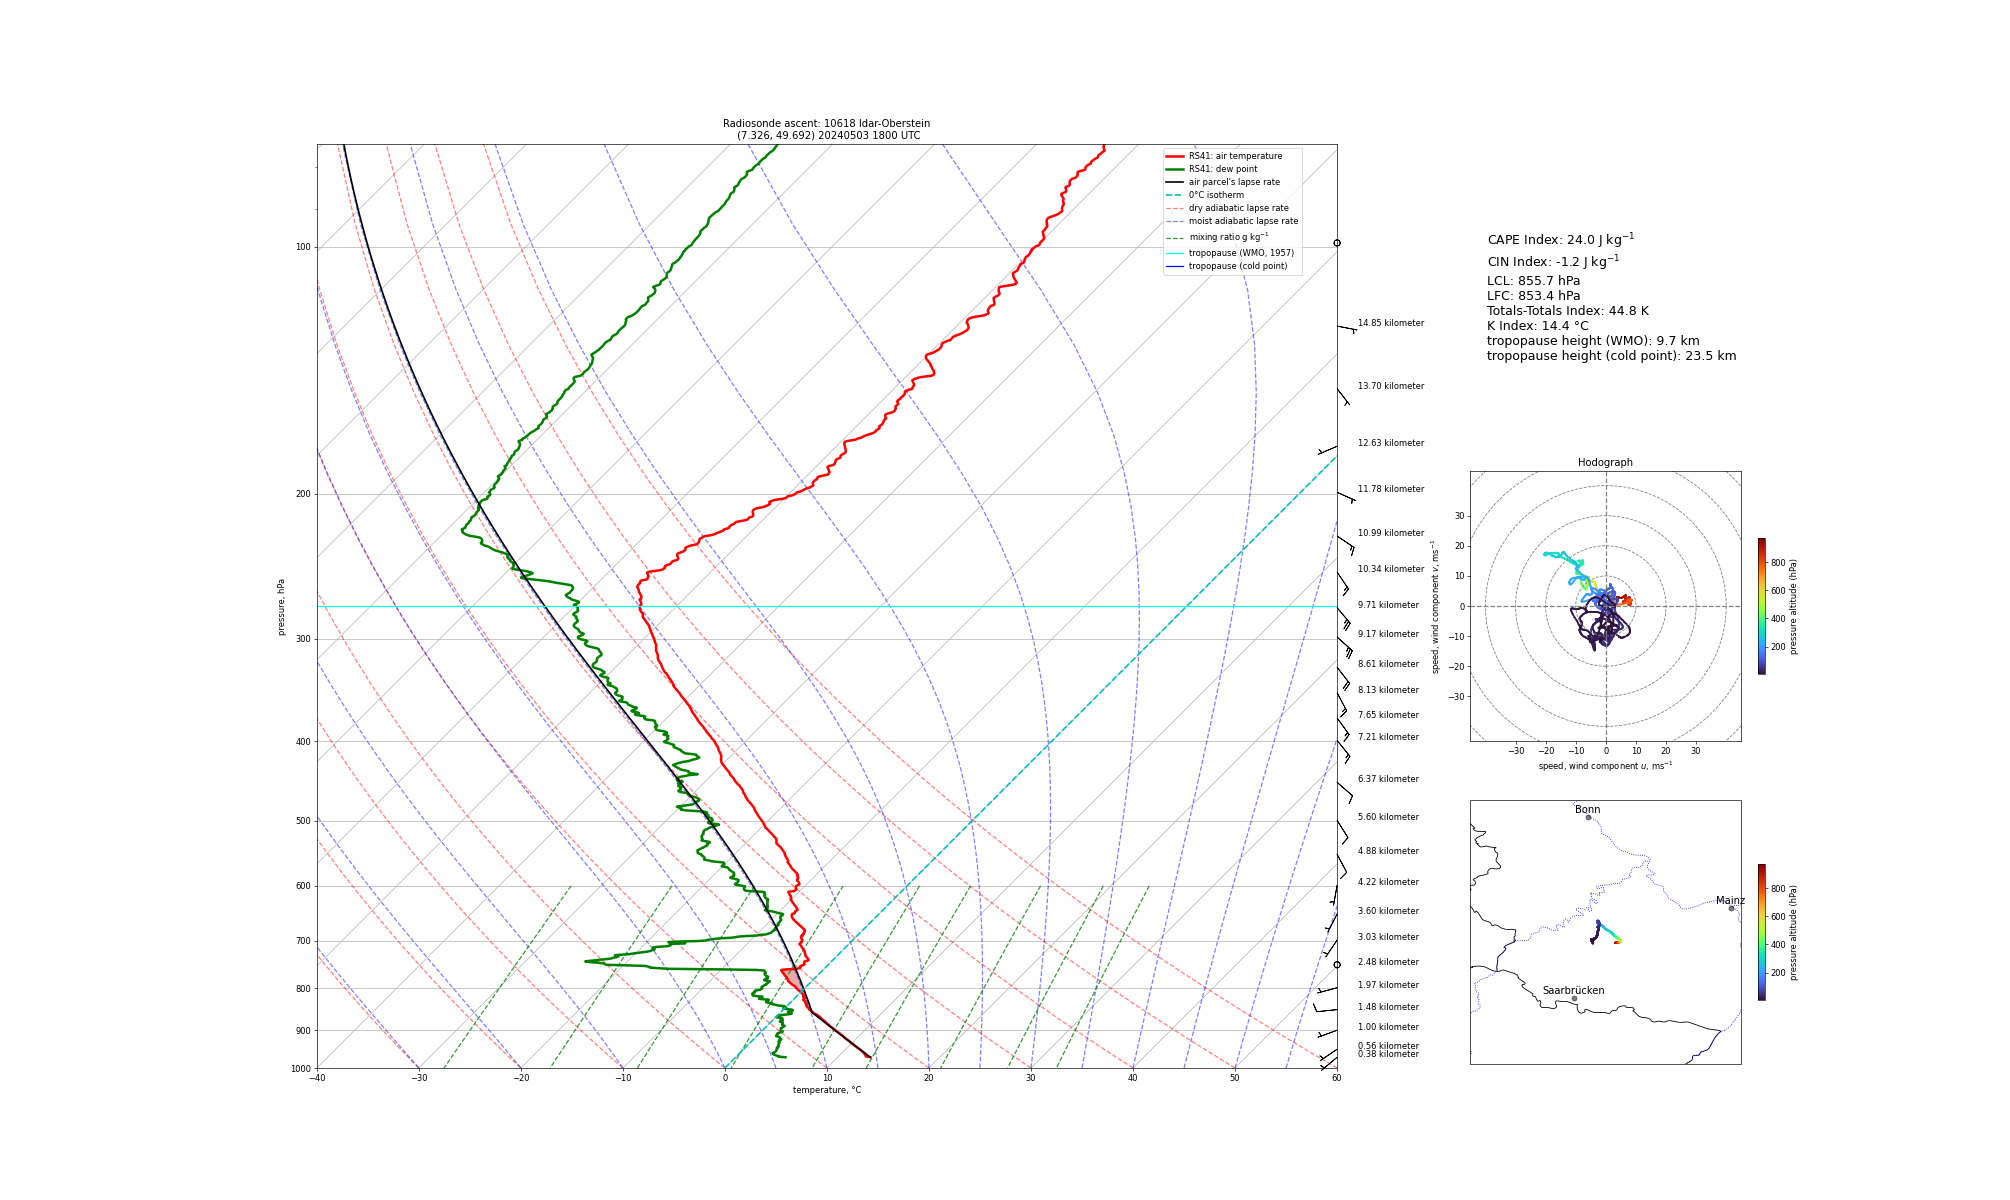 Visualisation of the radiosounding profile at Idar-Oberstein at 1800 UTC